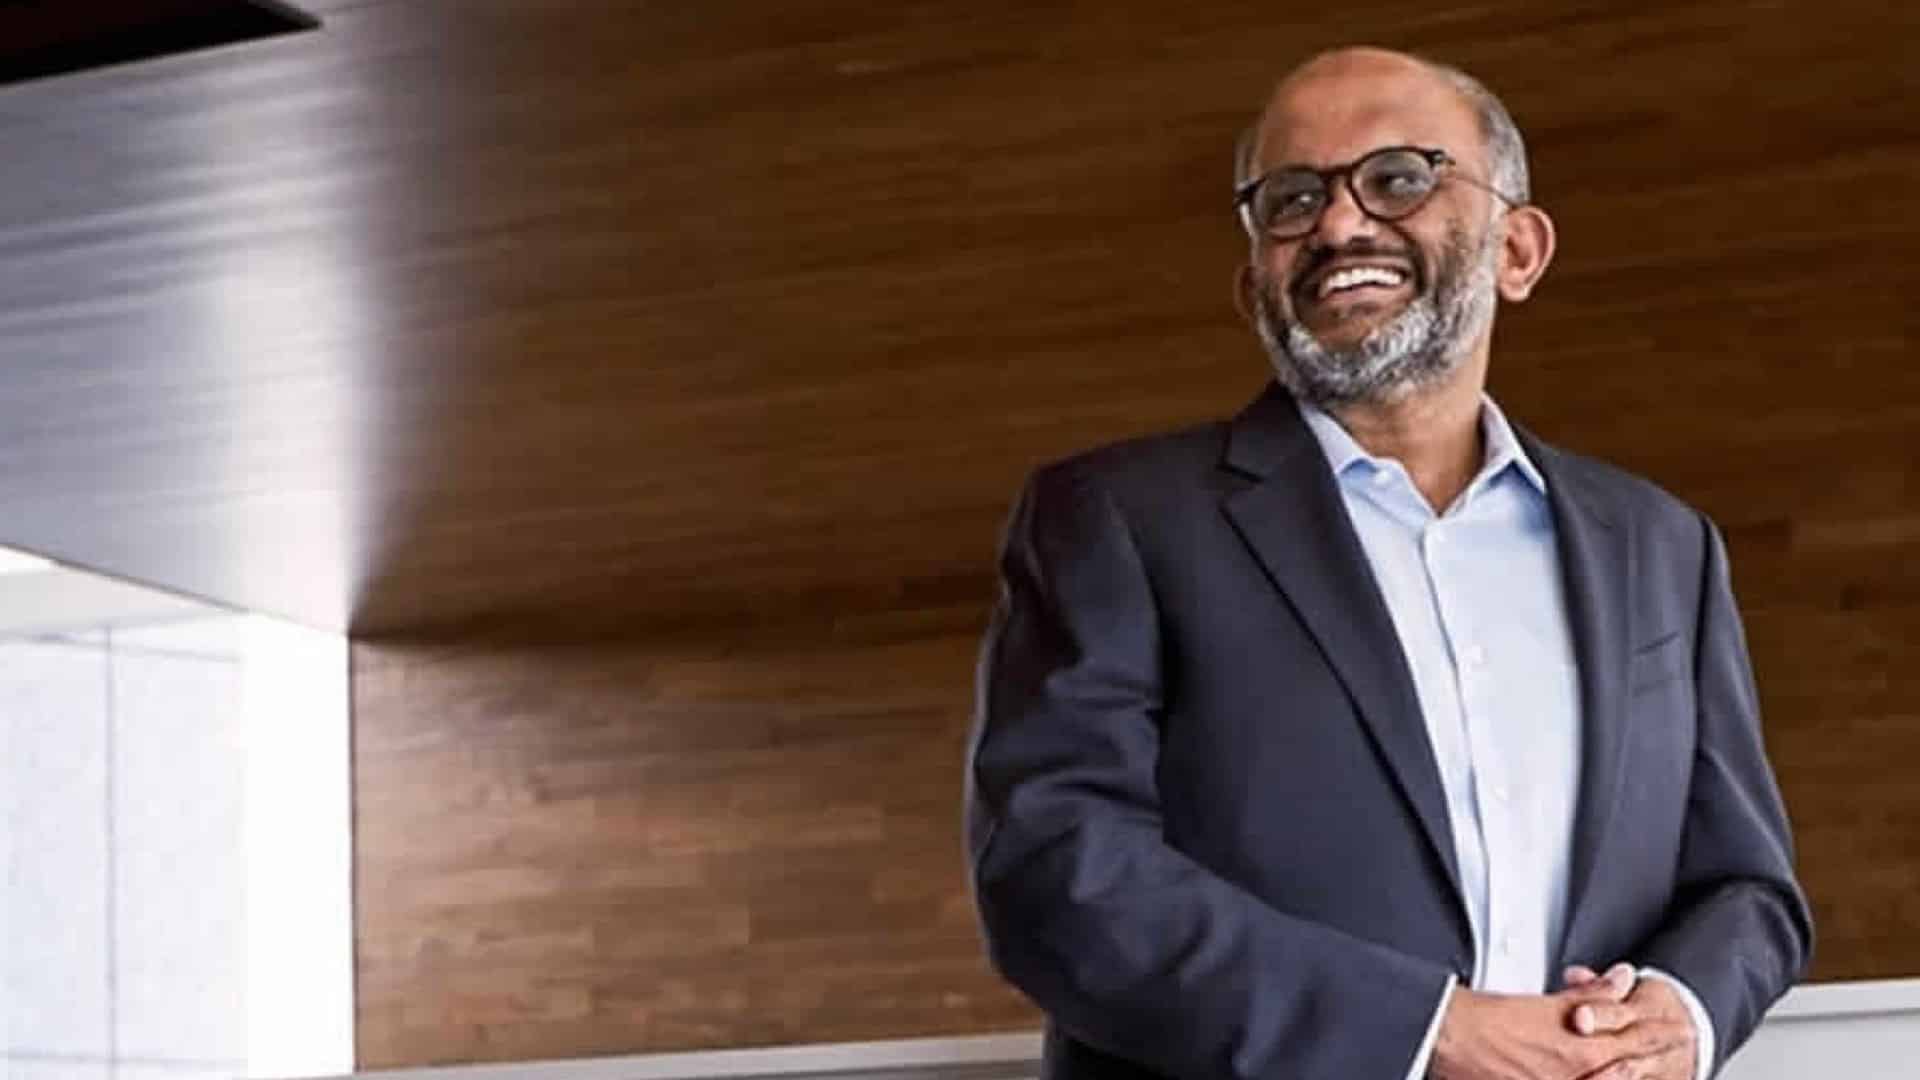 Massive fan of digital infra India has built: Adobe CEO Shantanu Narayen